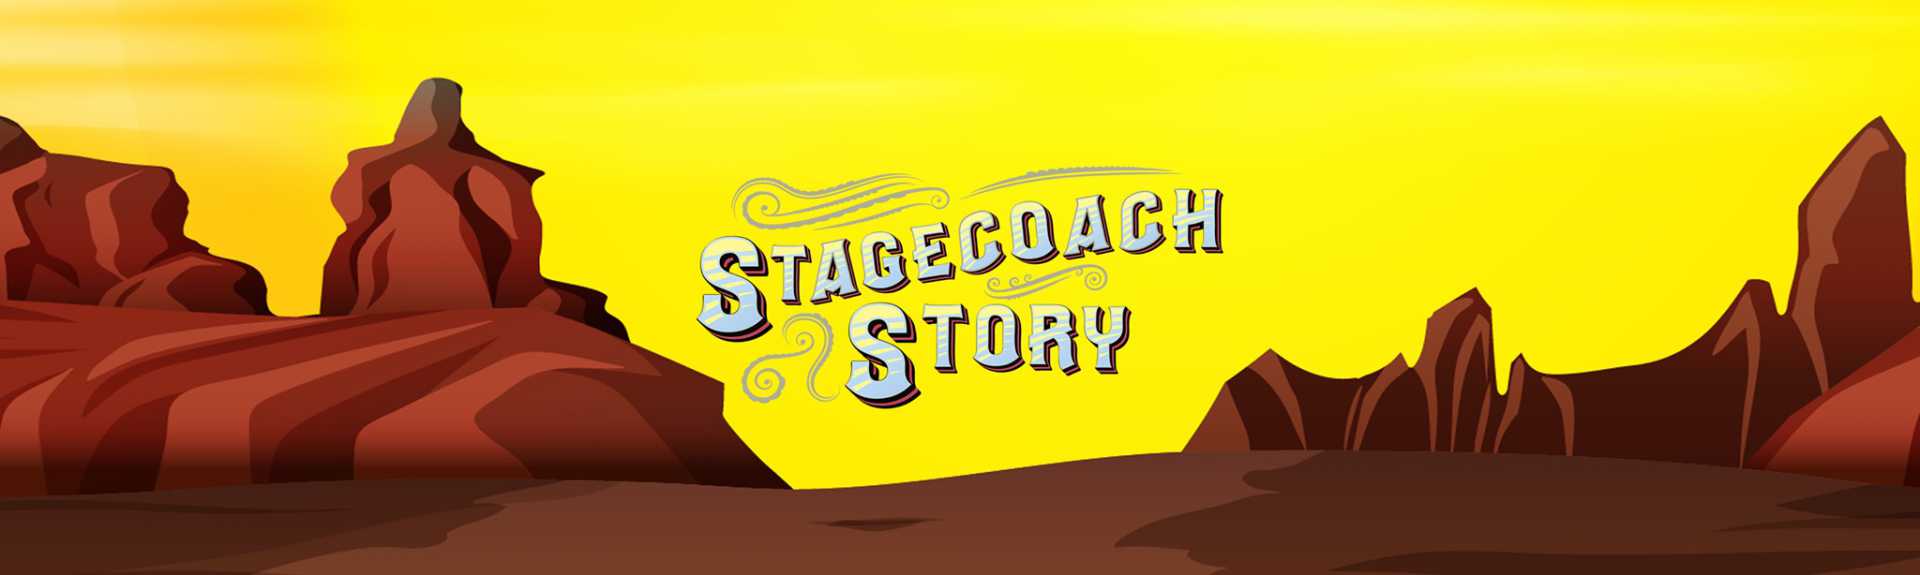 Stagecoach Story